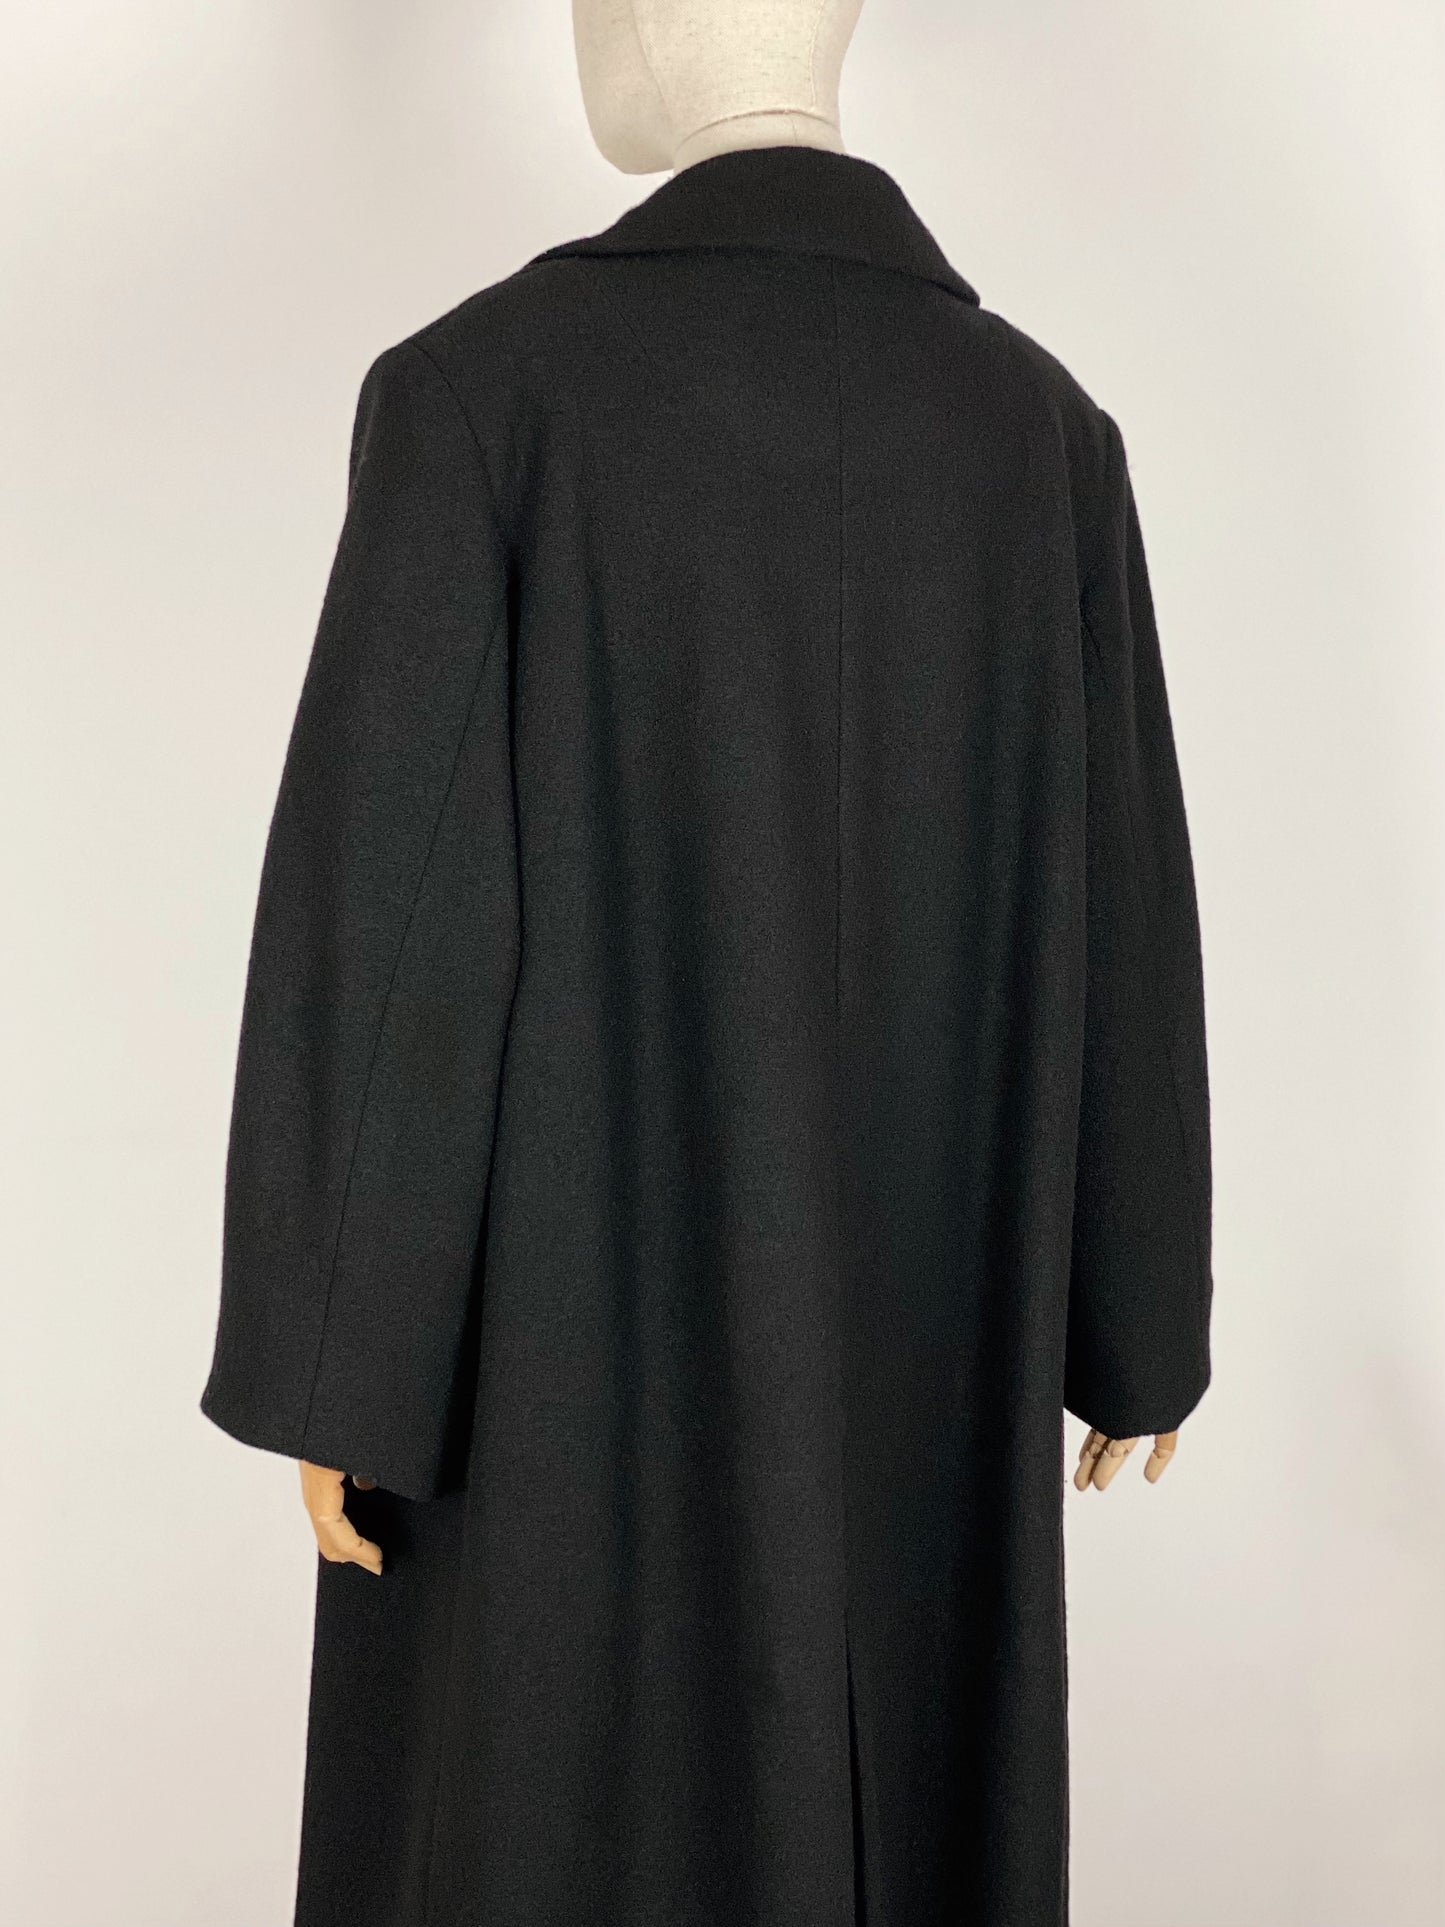 Vintage Handmade Black Coat